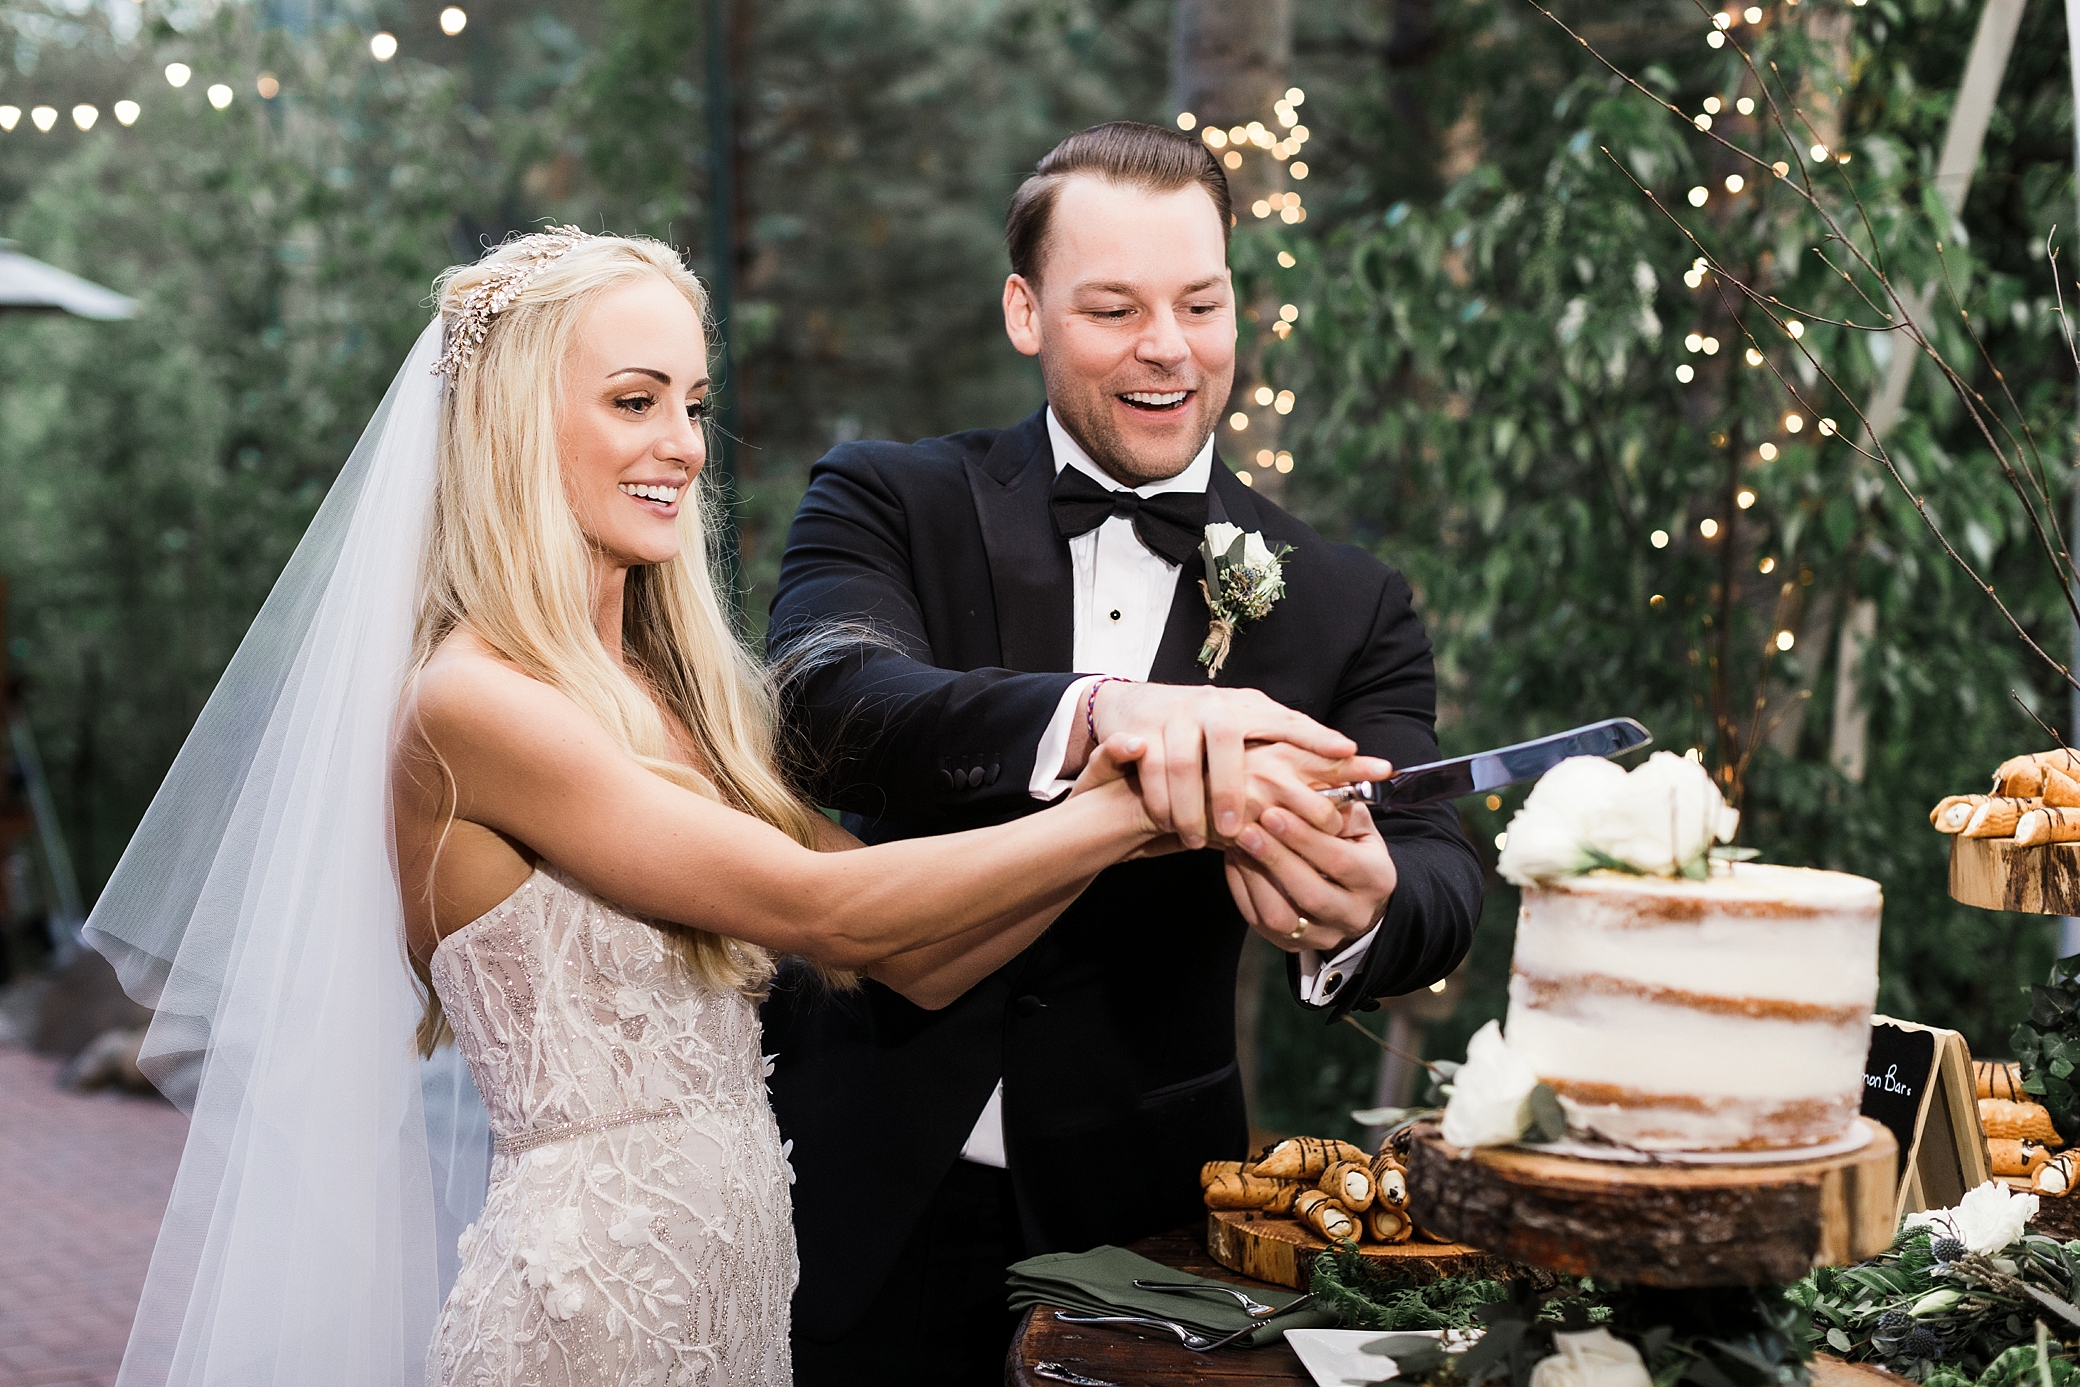 Bride and groom cutting cake | Twenty Mile House | Megan Montalvo Photography 